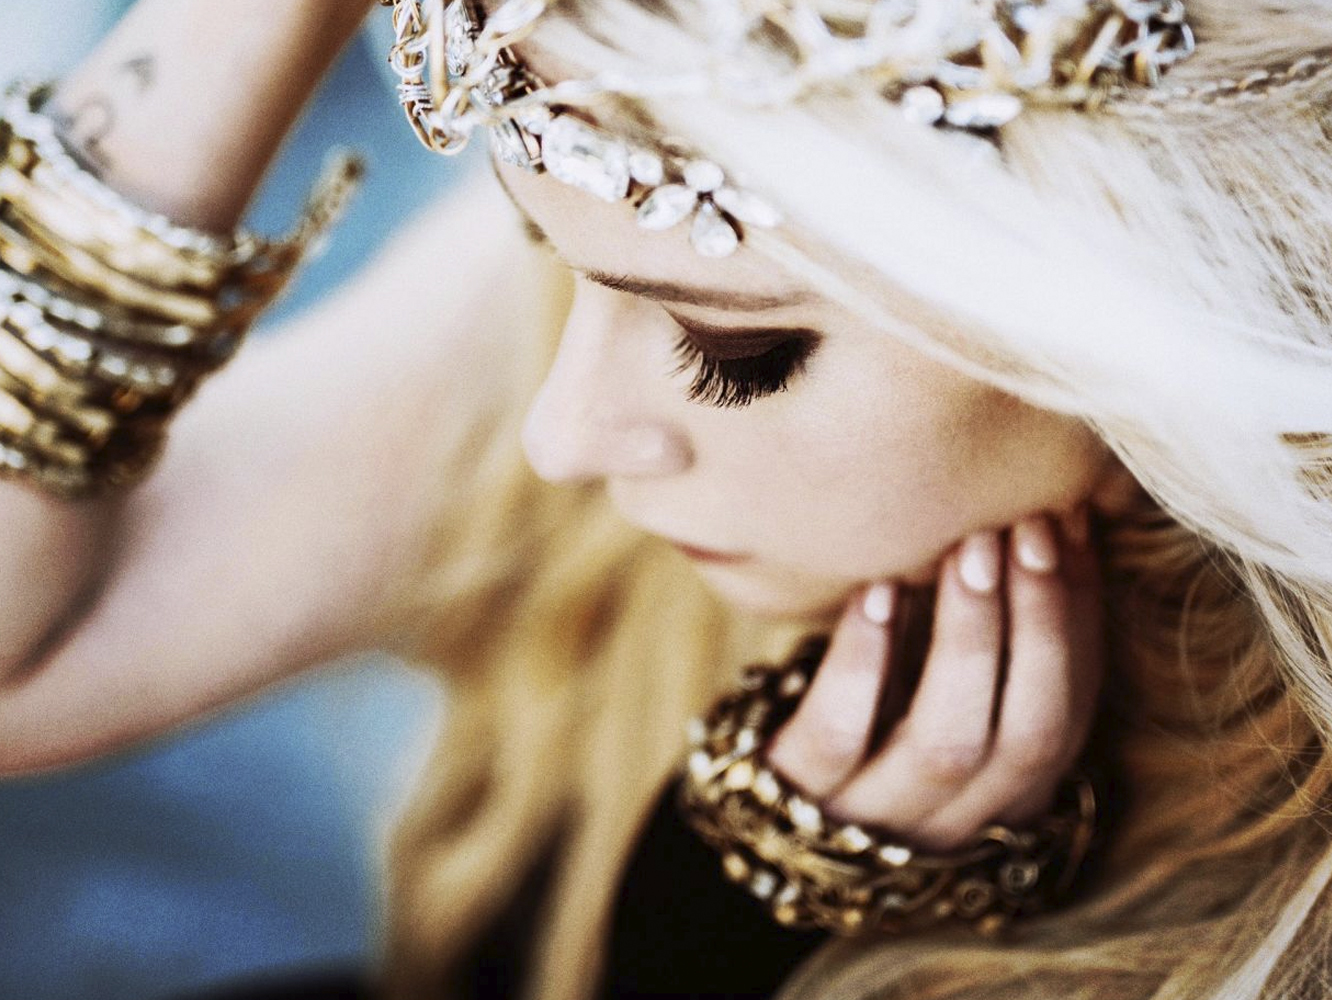  Avril Hasbeen intenta marcarse un bop con ‘Dumb Blonde’, junto a una Nicki Minaj de oferta